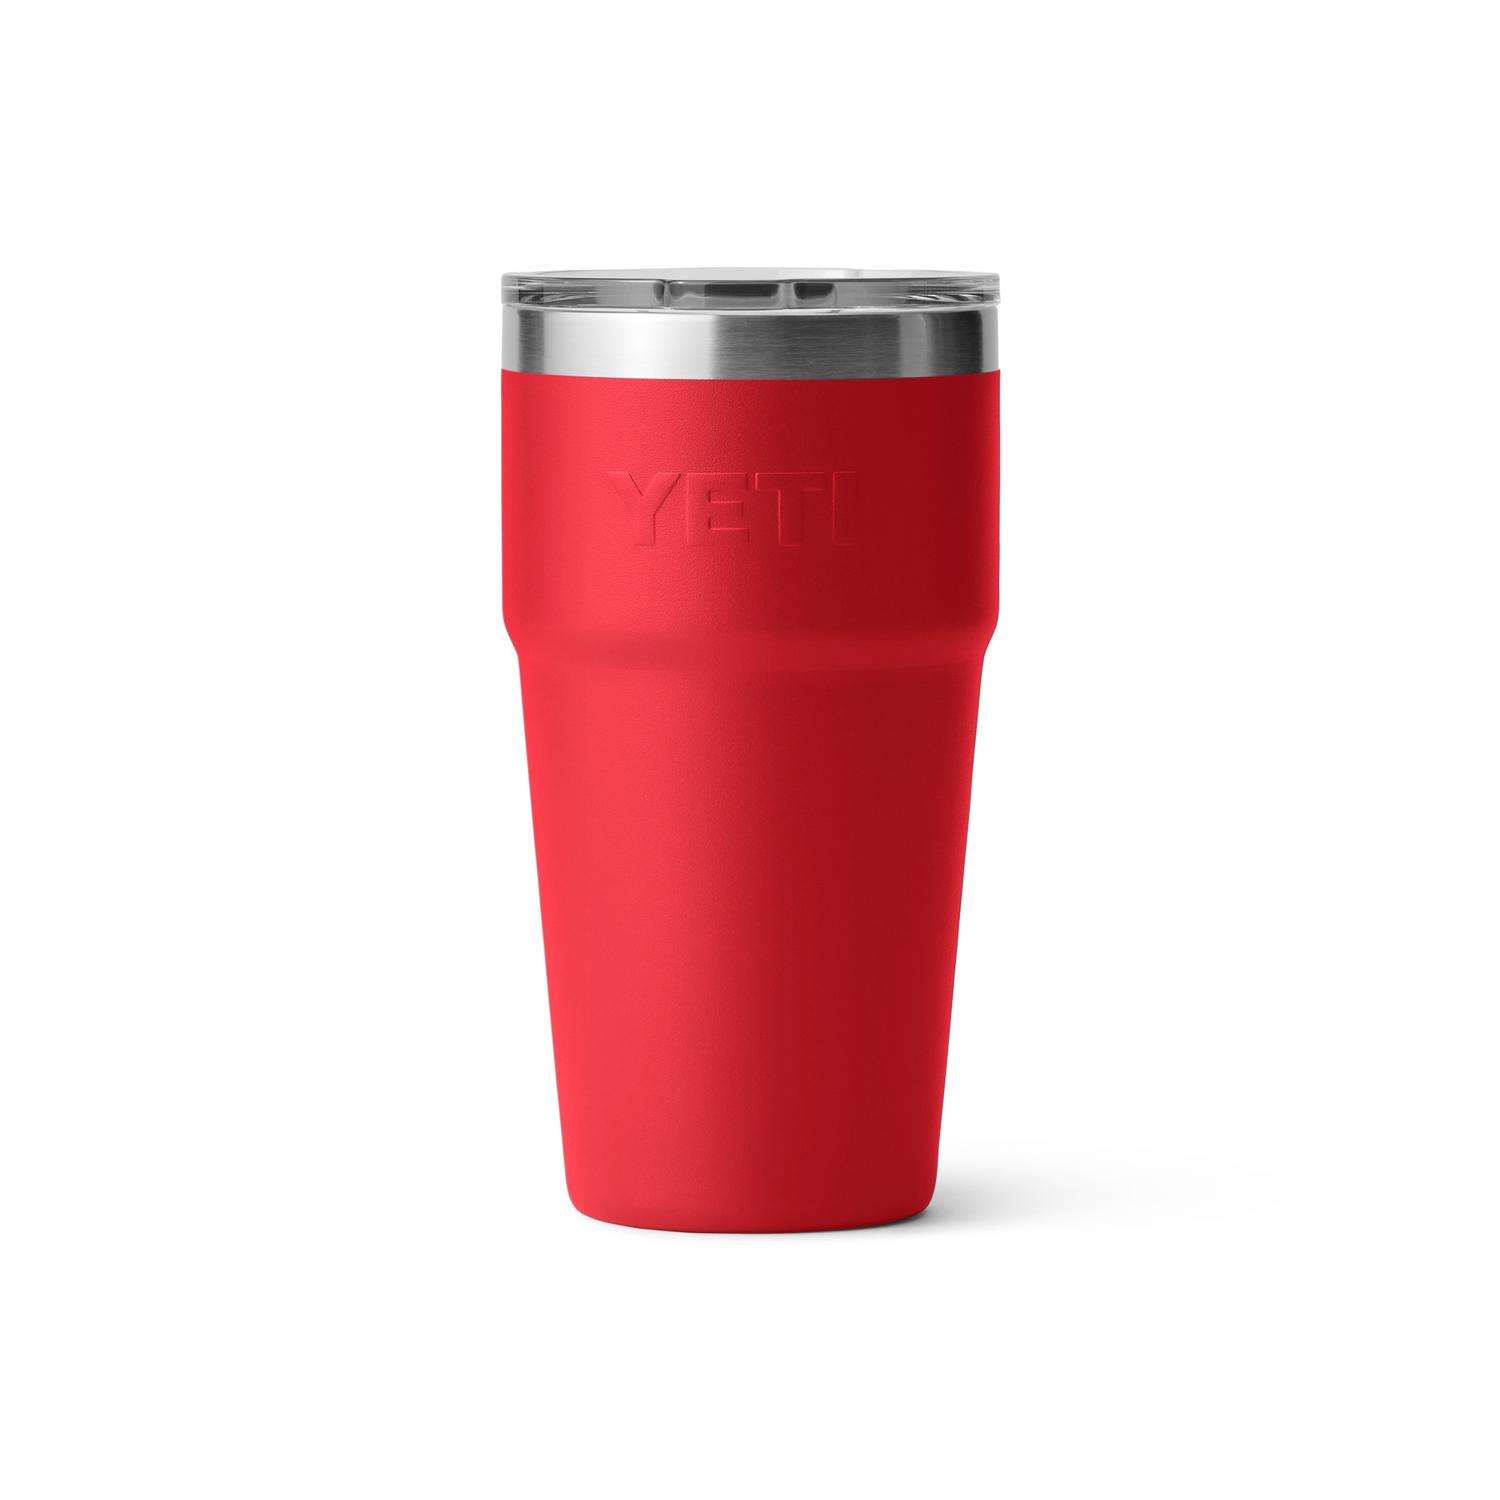 Liquid Test: YETI Rambler 'Personal Drink Cooler